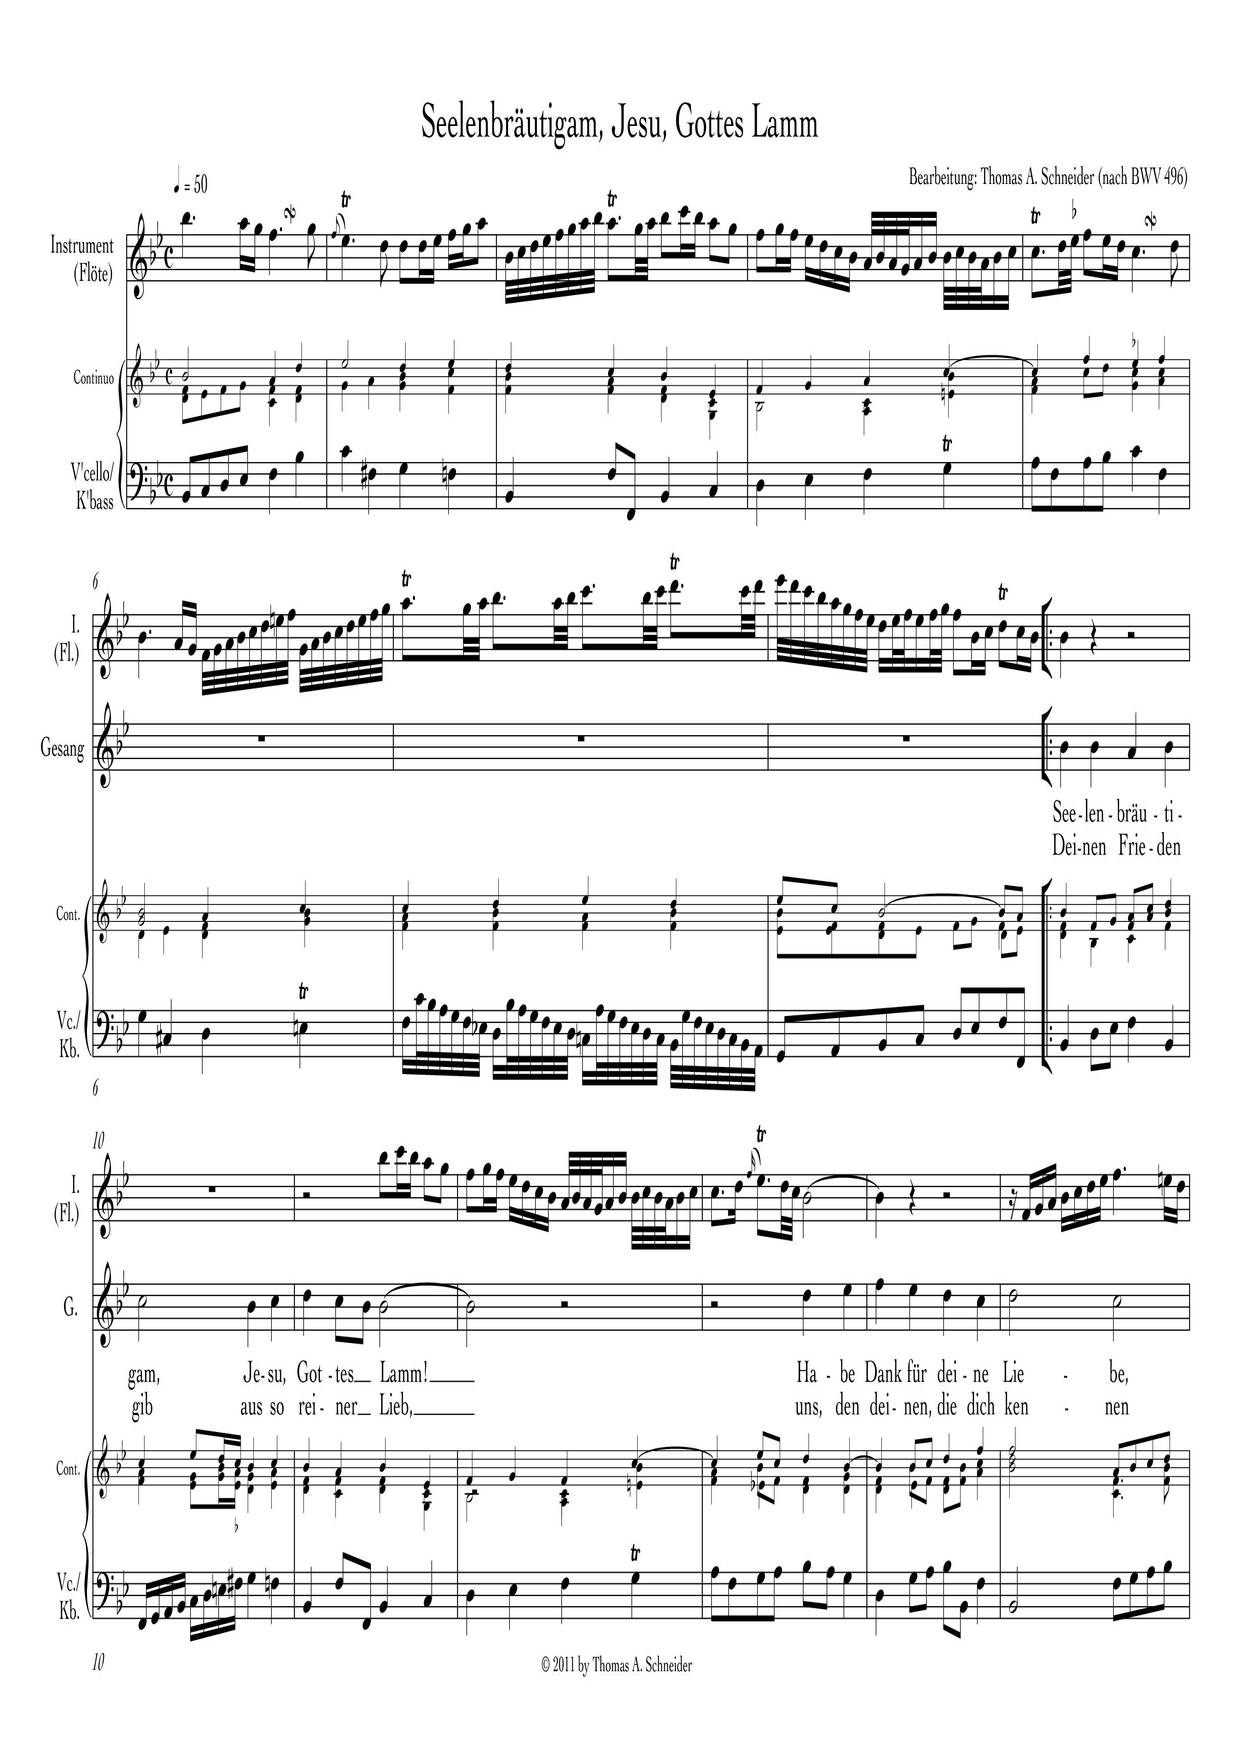 Seelen-Bräutigam, Jesu, Gottes Lamm, BWV 496 Score